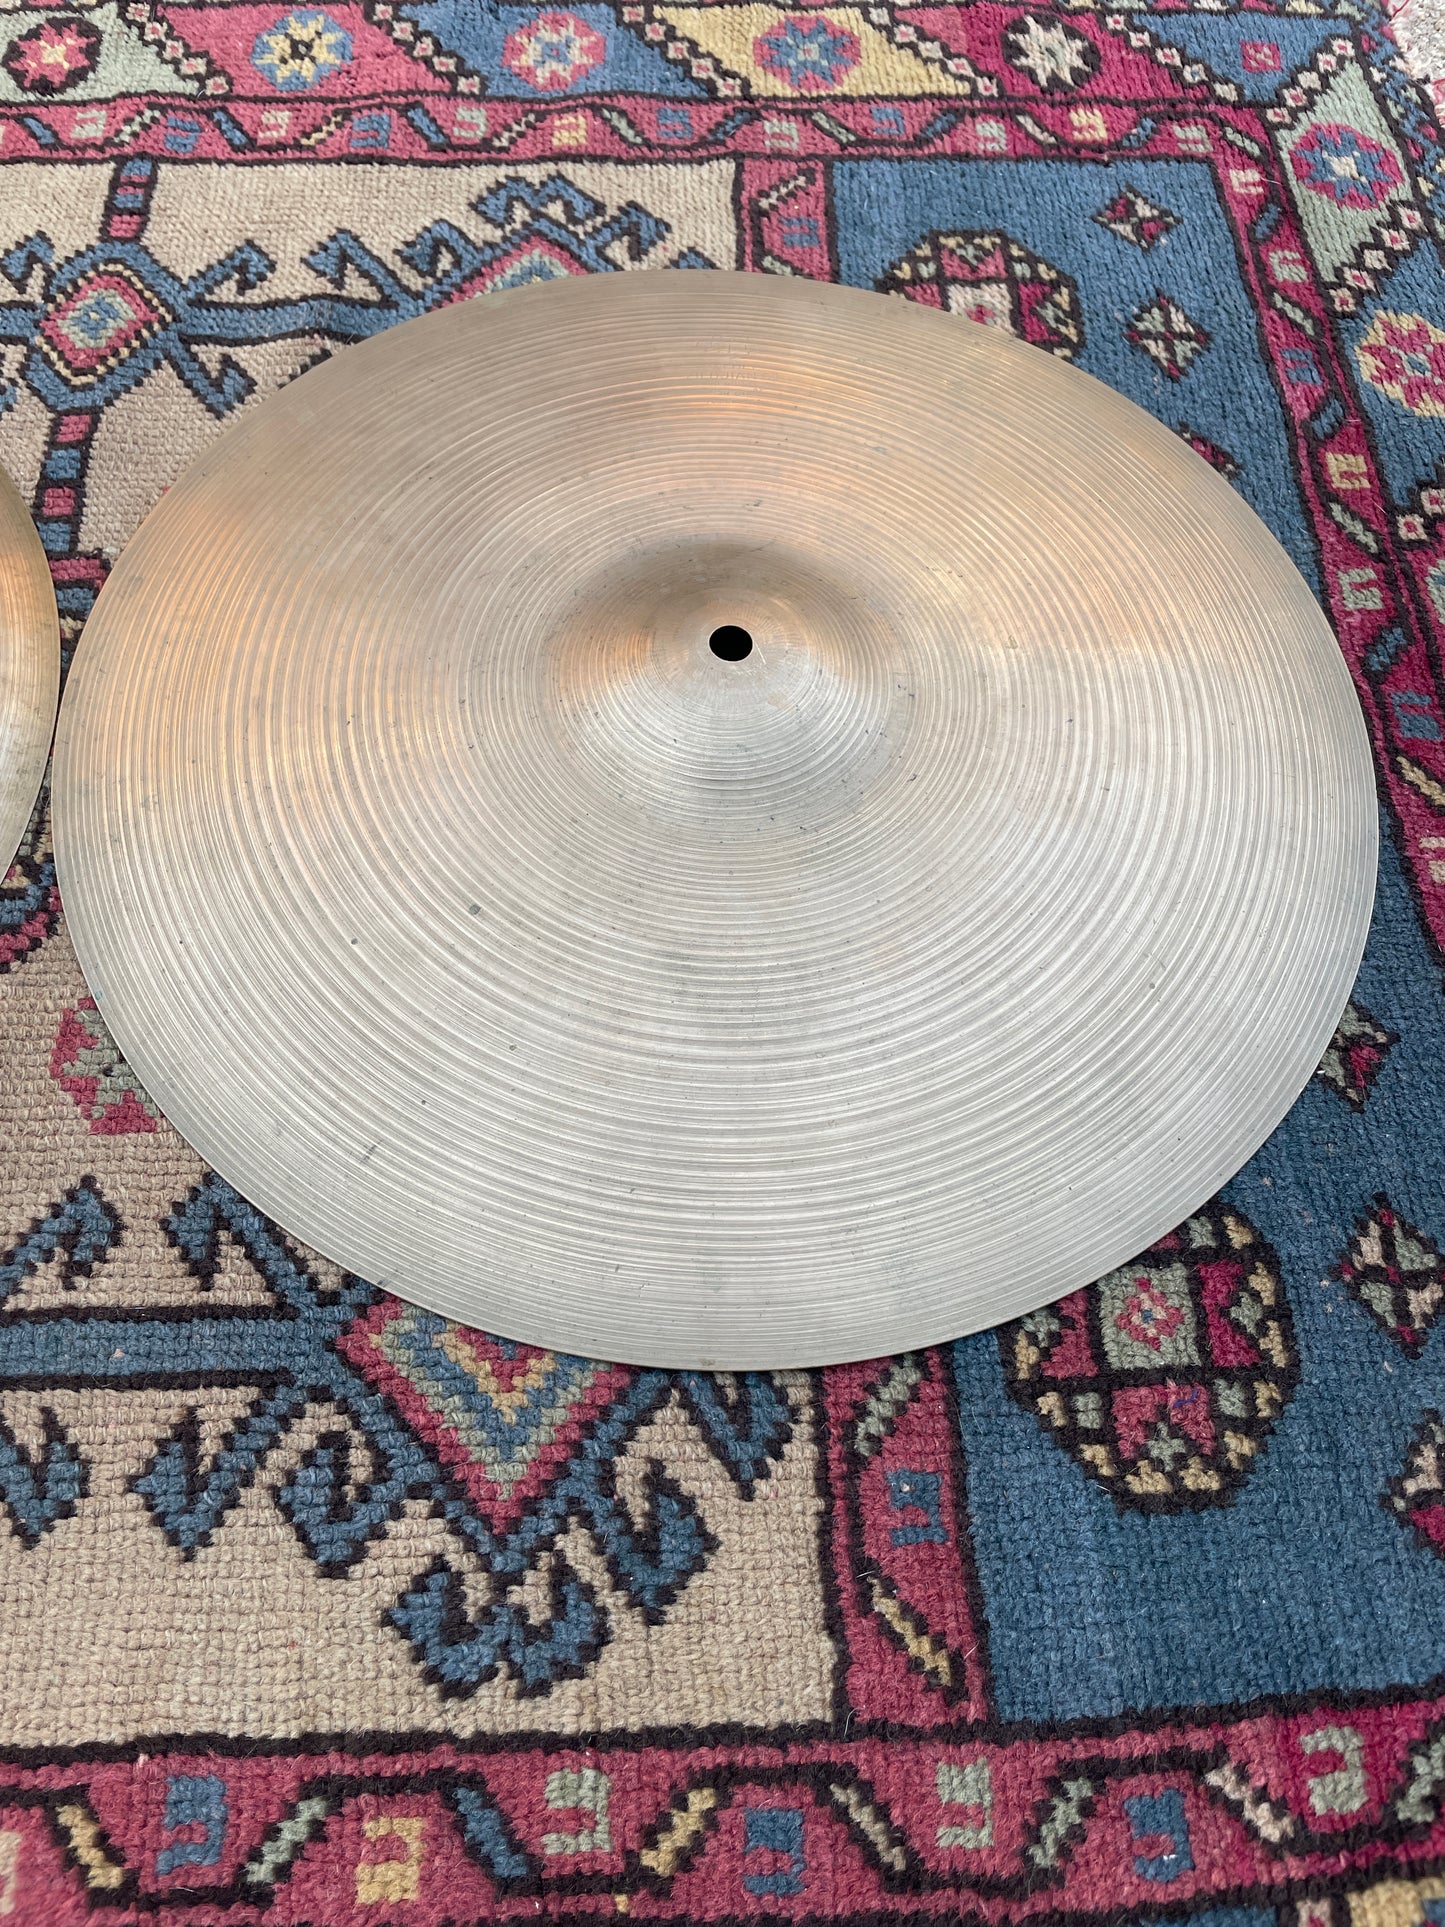 16" Zildjian A 1960s Hi-Hat Cymbal Pair 1014g/1804g #191 *Video Demo*